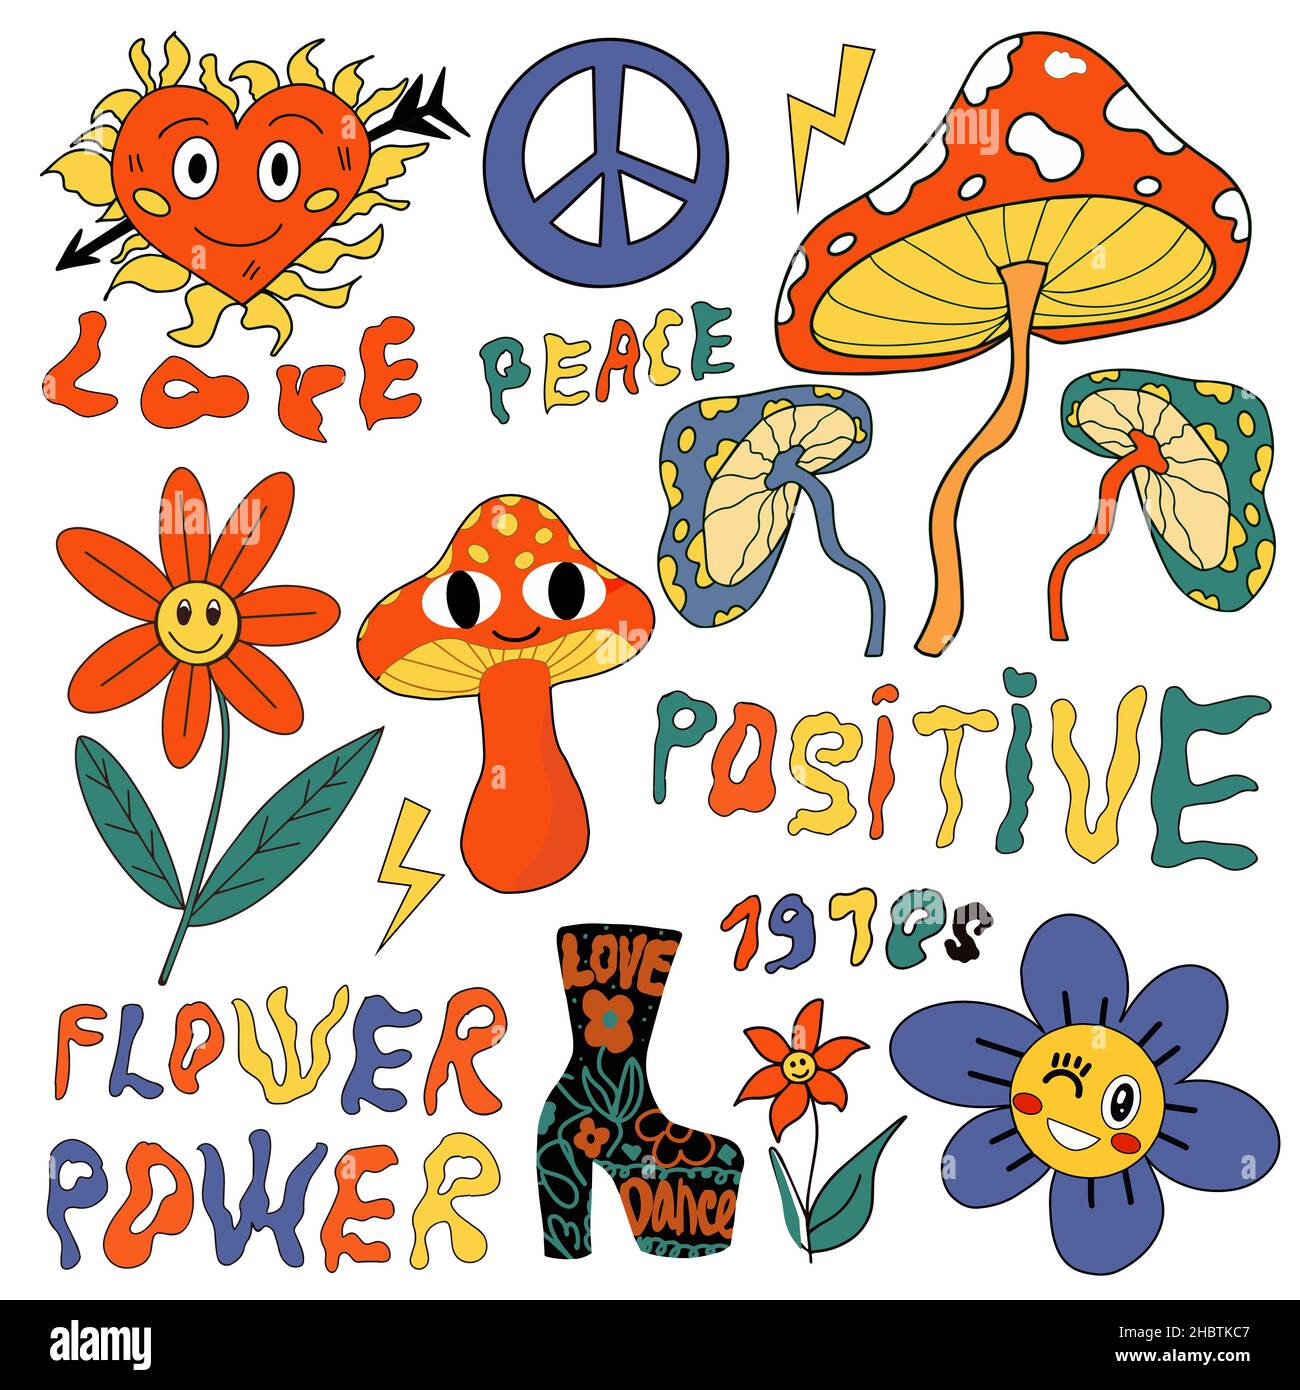 Hippie Wall Art, 70s Room Decor, Flower Power, Y2k Hippie